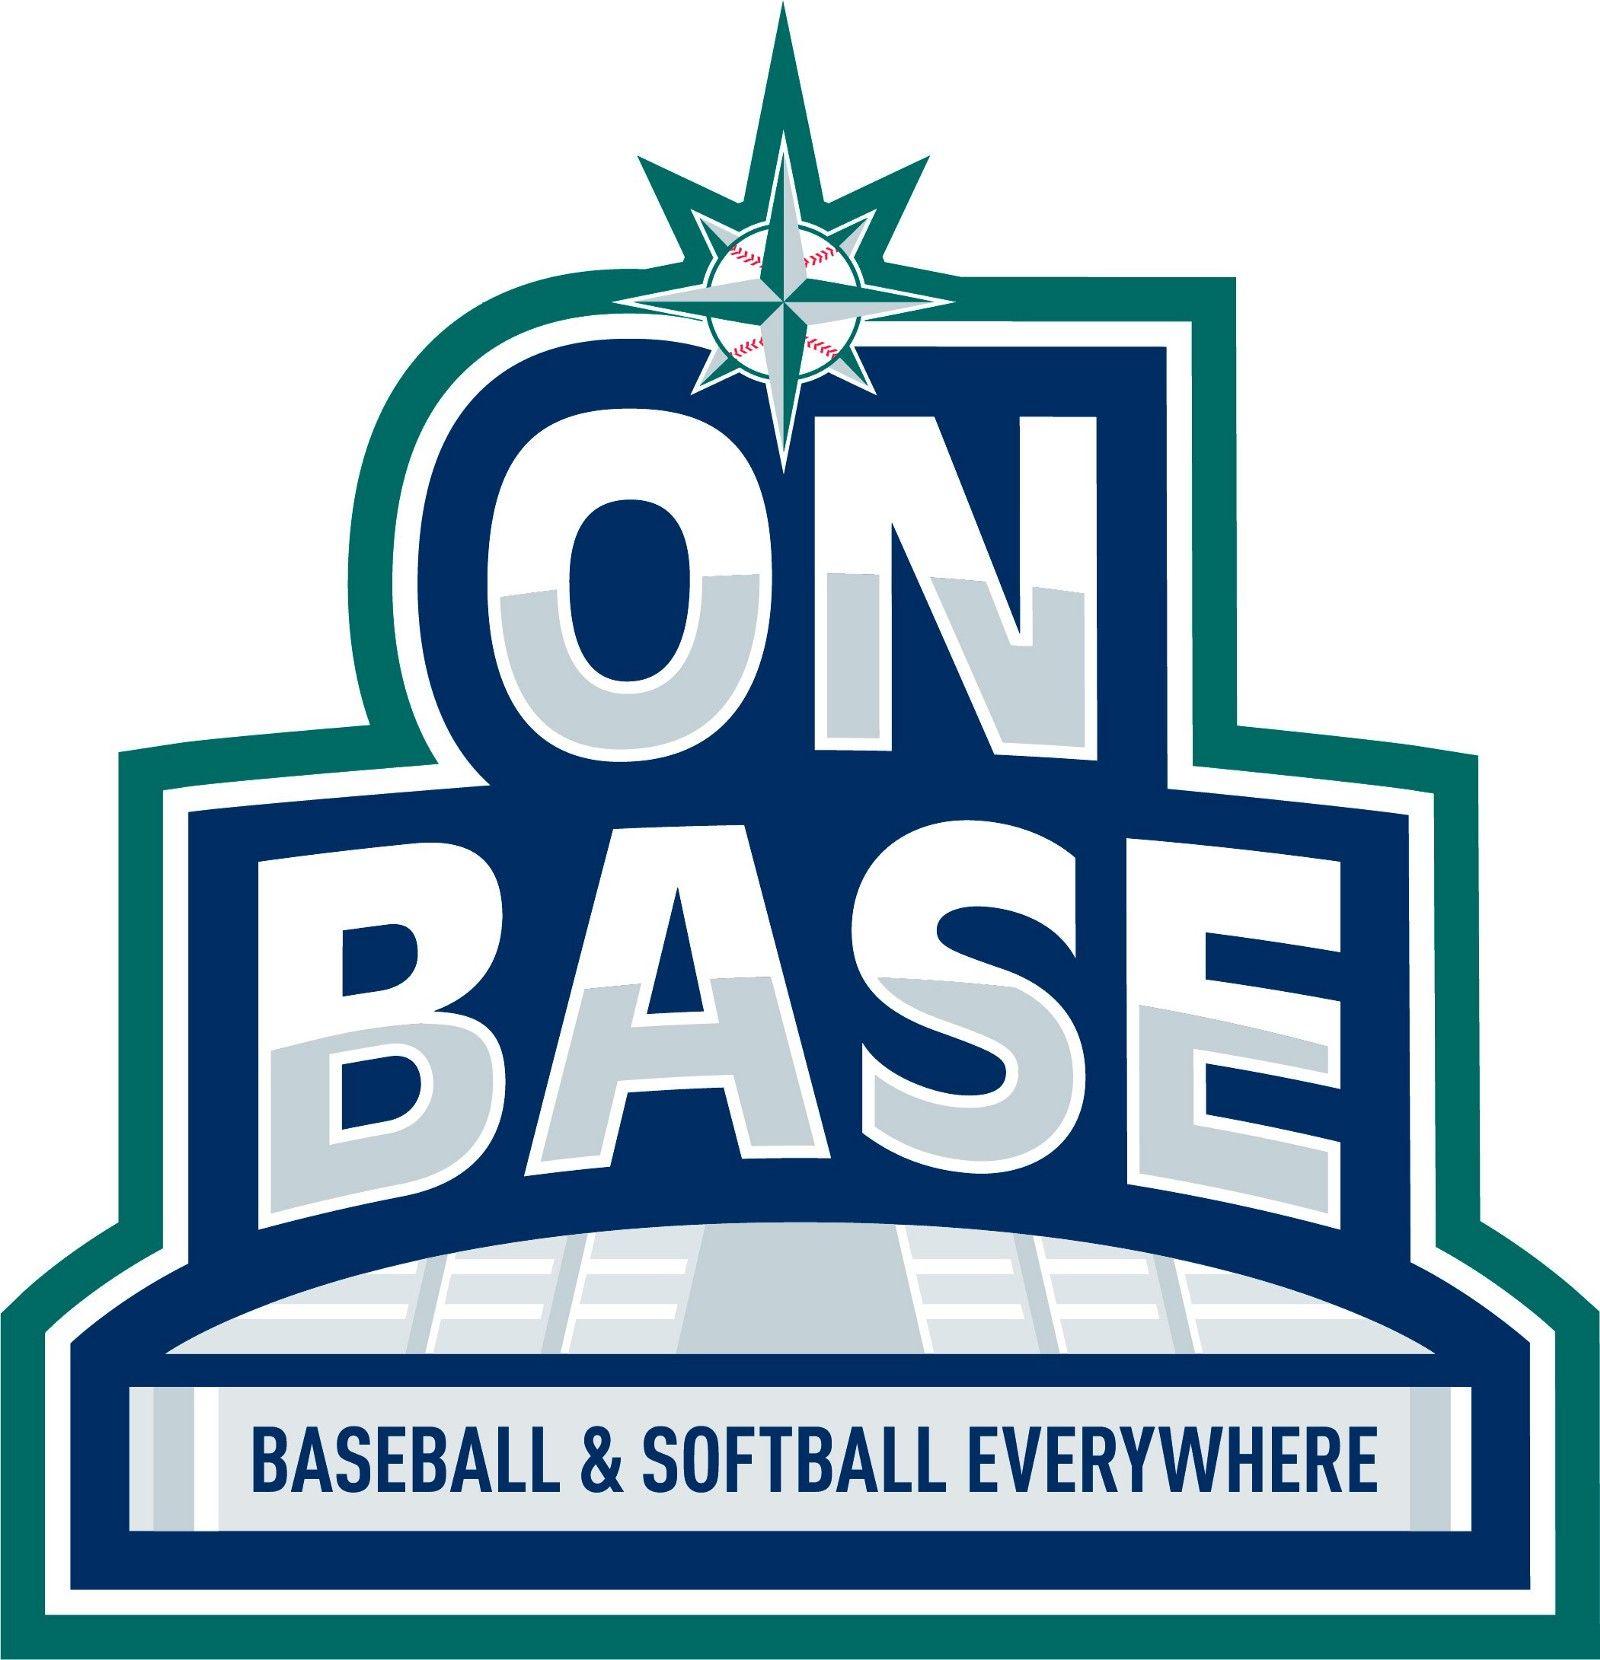 Softball Base Logo - On BASE — Baseball & Softball Everywhere – From the Corner of Edgar ...